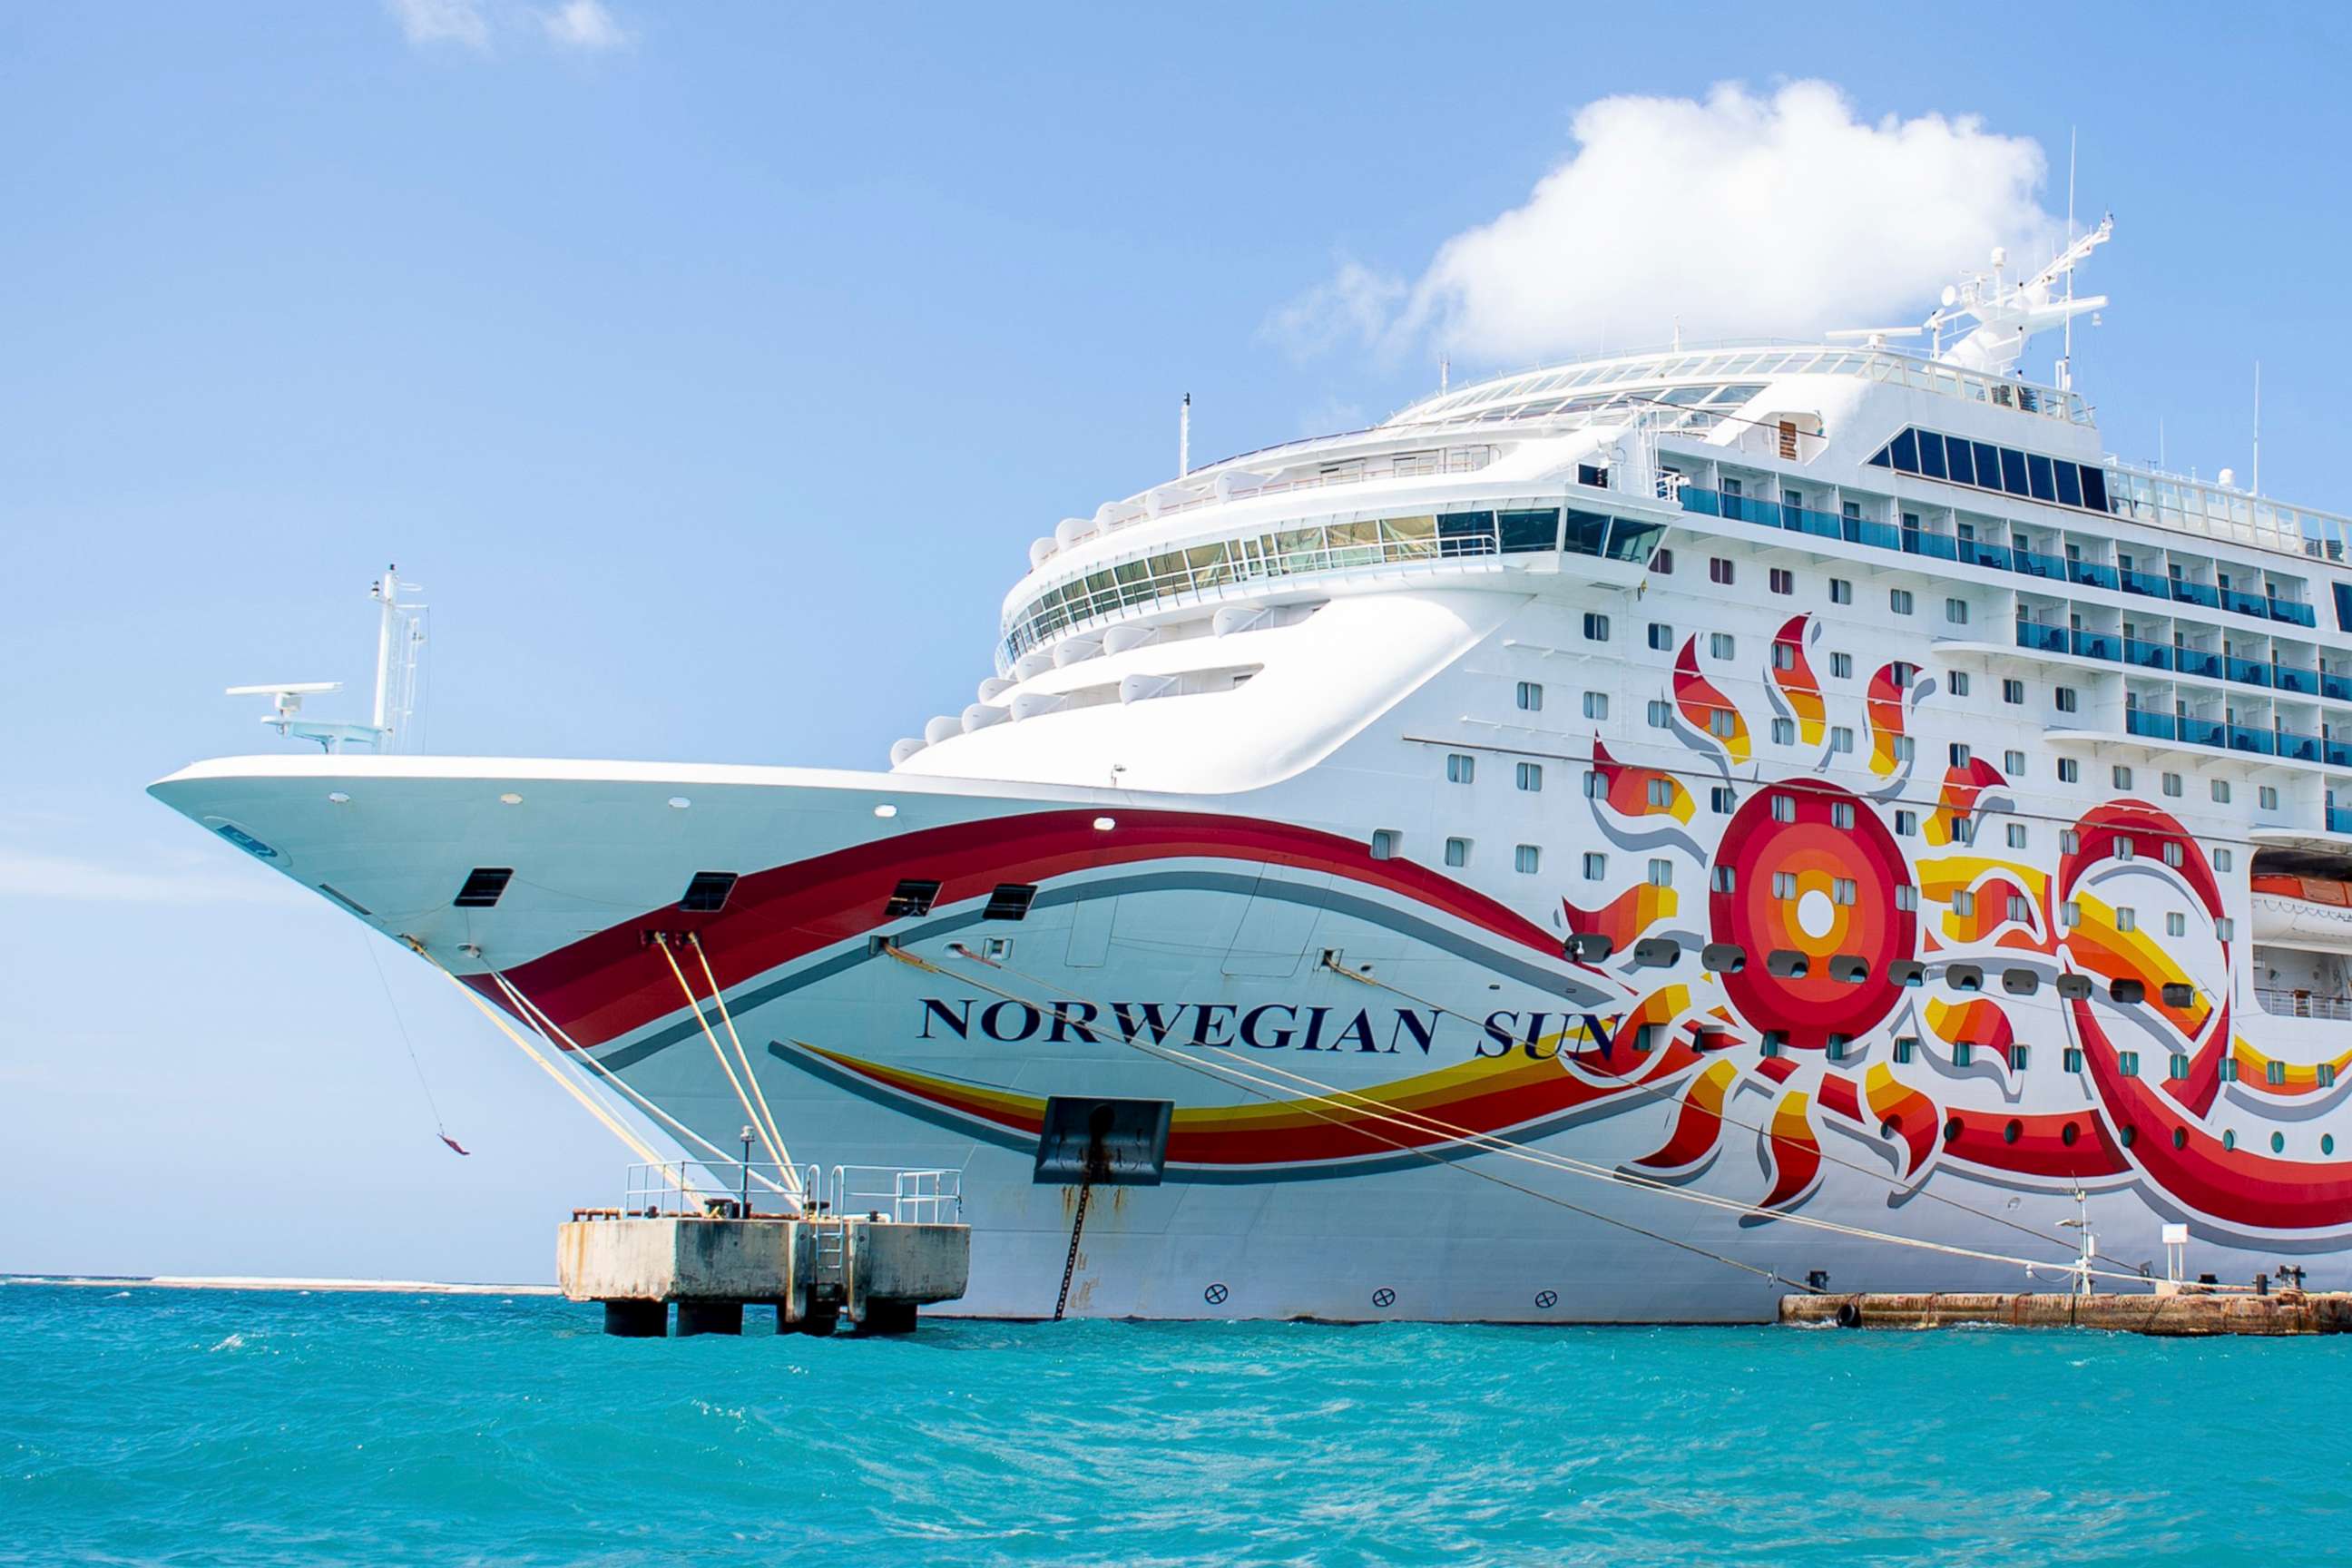 PHOTO: Norwegian Sun from Norwegian Cruise Line sits in the waters near the Dutch Carribean island of Aruba, Apr 23, 2021.